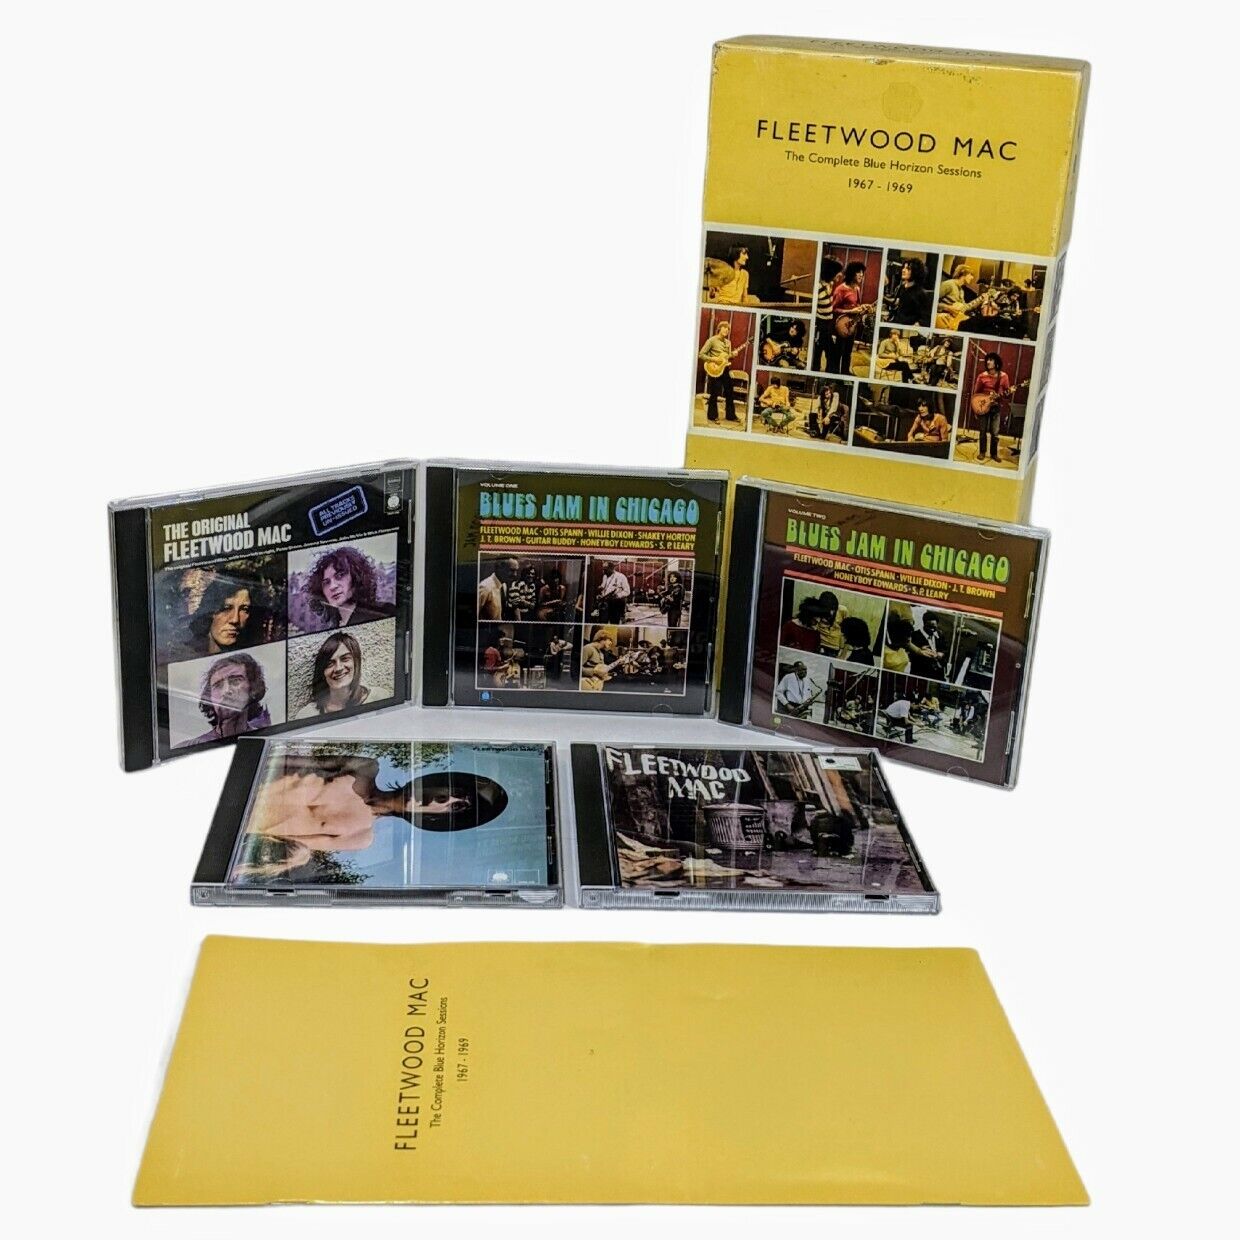 Fleetwood Mac The Complete Blue Horizon Sessions CD Box Set 1967-69 Missing 1 CD